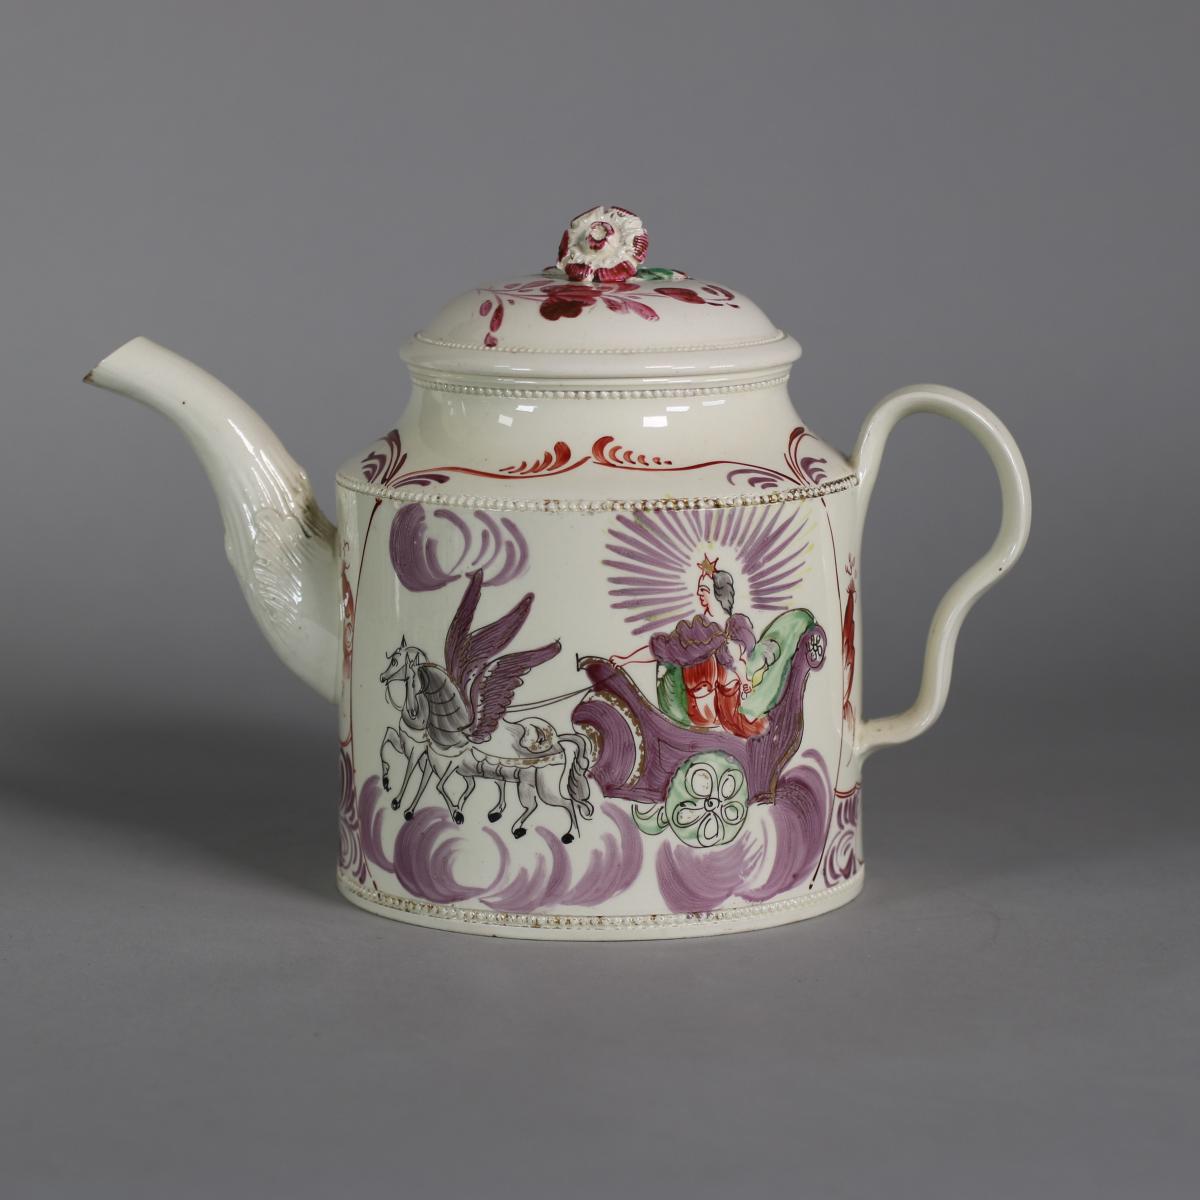 Leeds creamware teapot